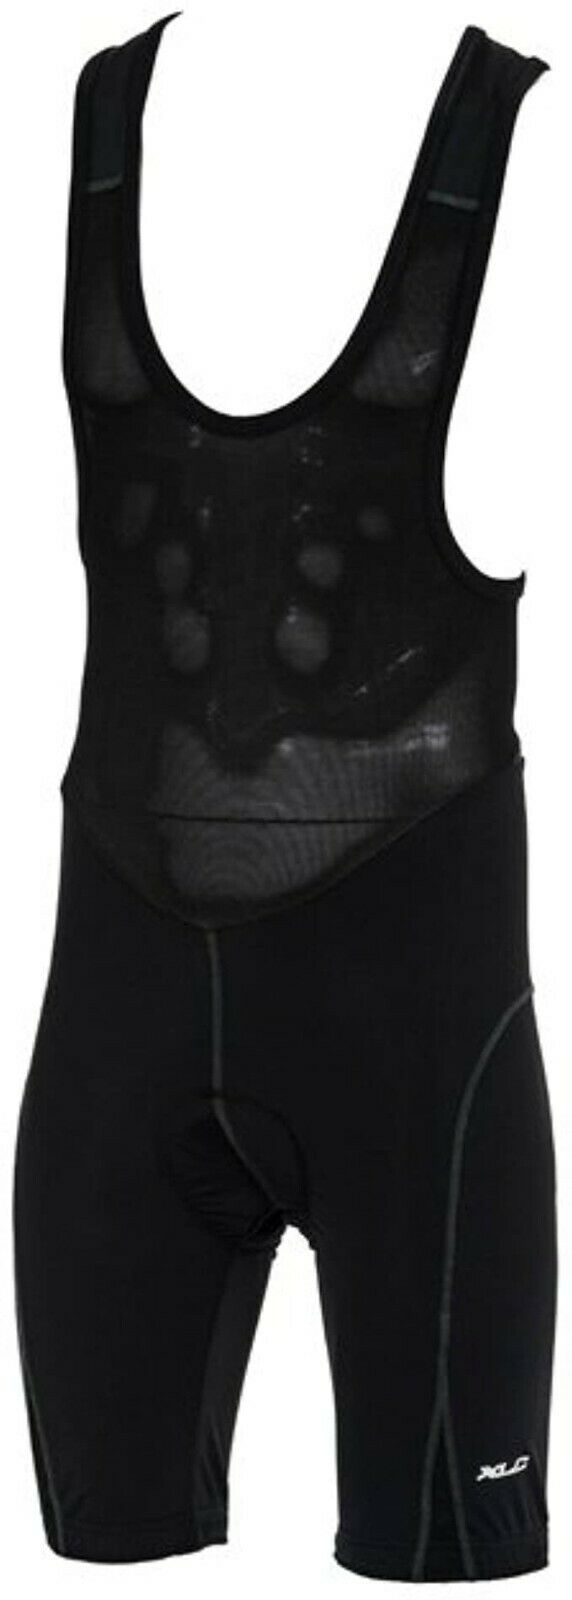 XLC Active Bib Shorts - Black - Sportandleisure.com (7452836593921)